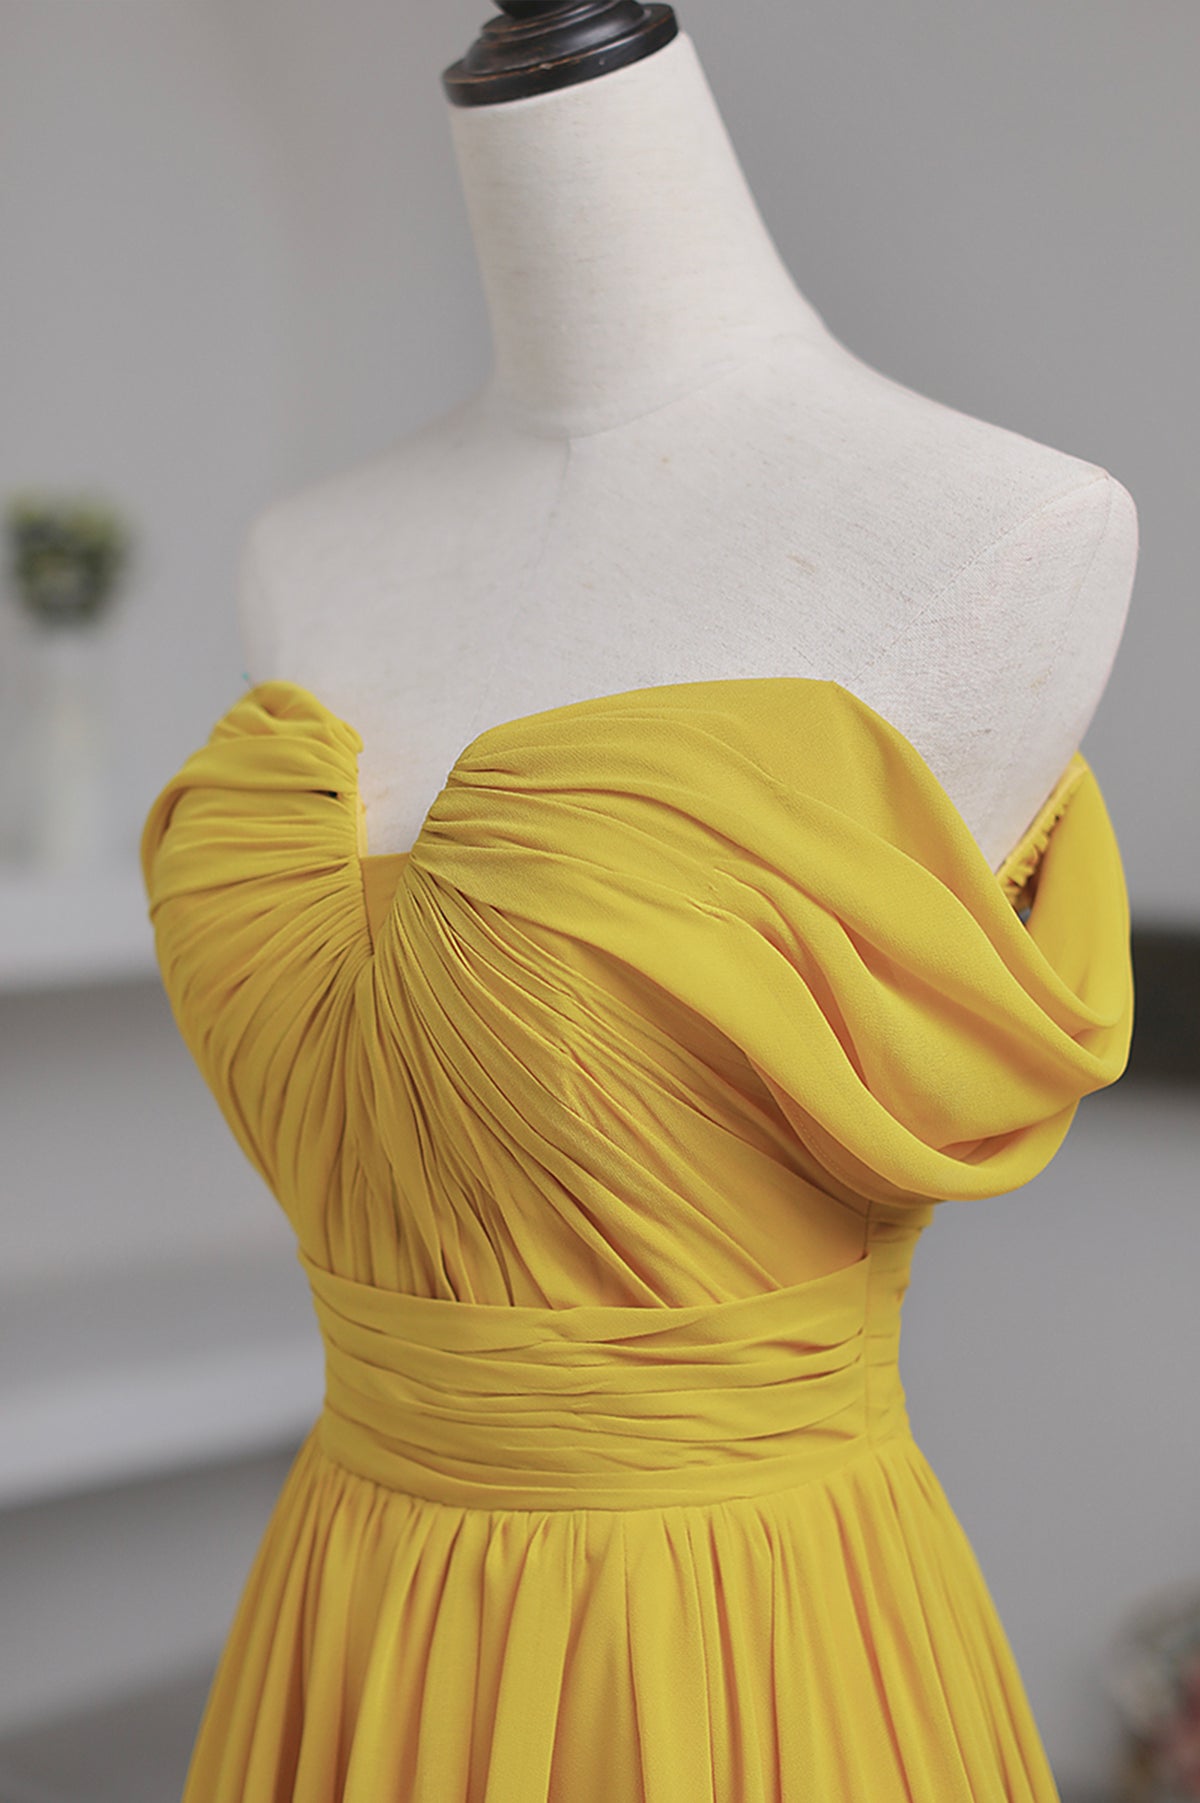 Yellow Chiffon Long A-Line Prom Dress, Simple Yellow Evening Dress with Slit